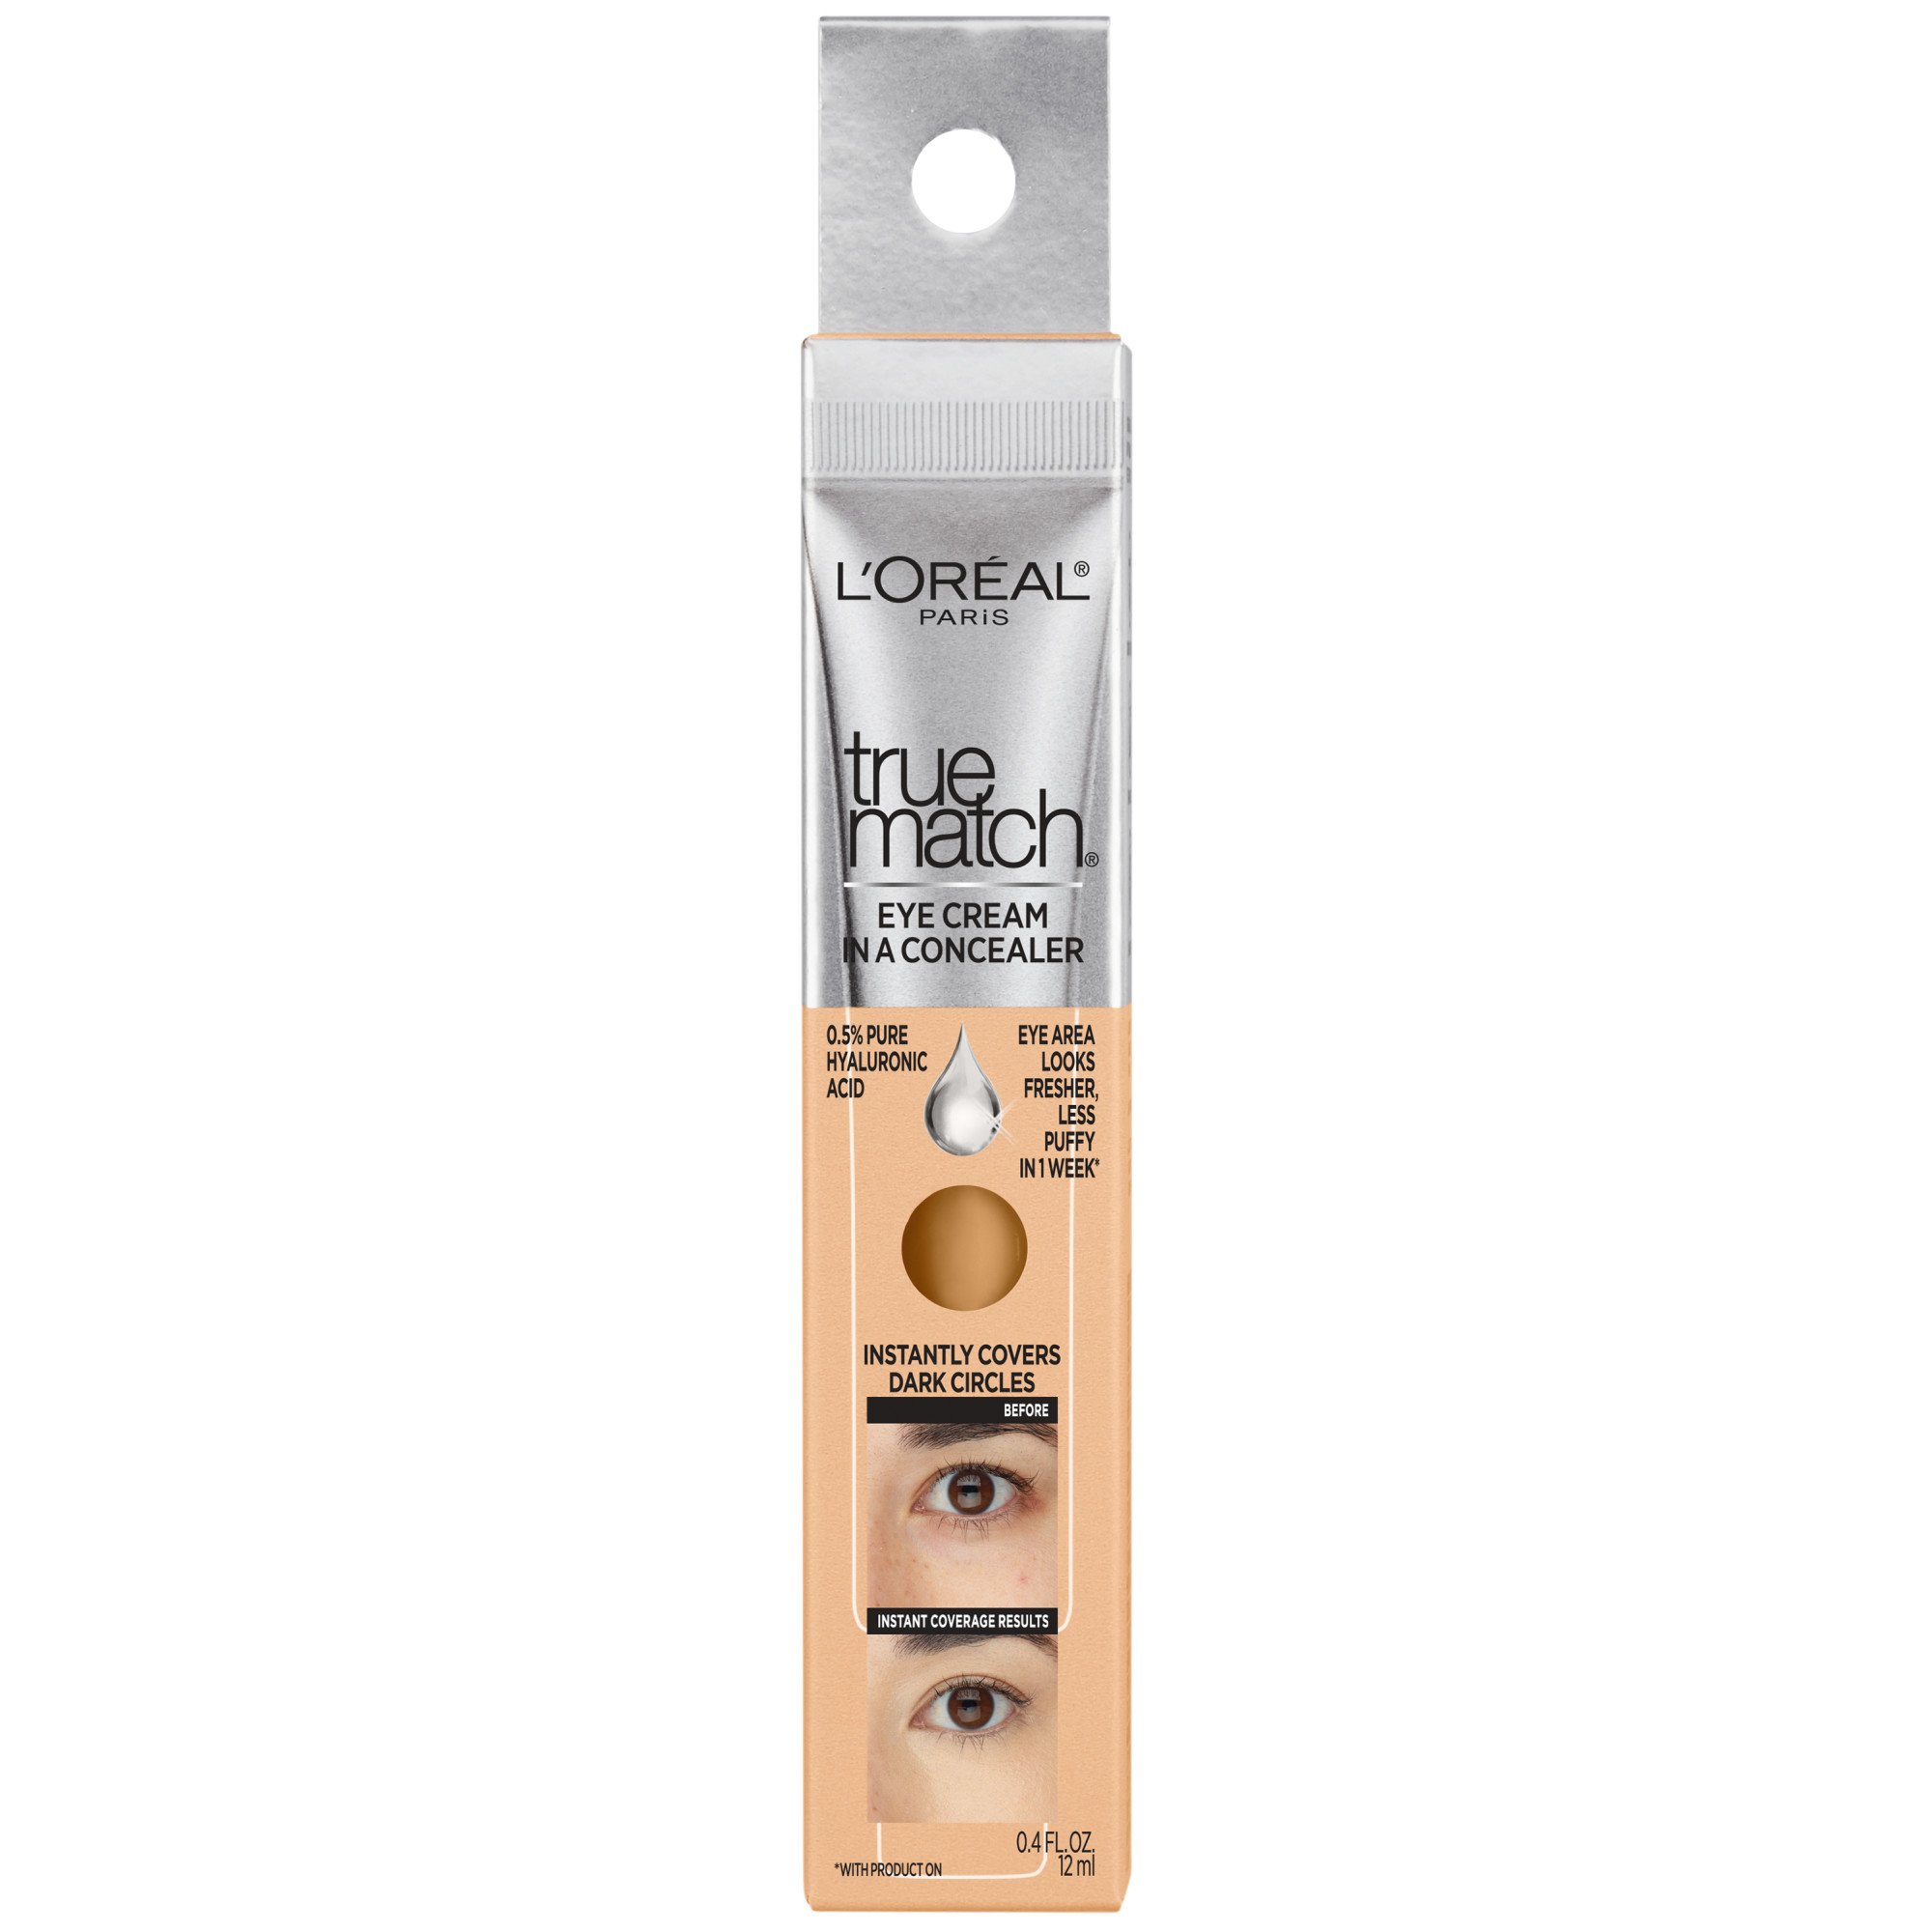 L'Oréal Paris True Match Eye Cream in a 0.5 percent hyaluronic acid W3-4 - Shop Concealer & Color Corrector at H-E-B